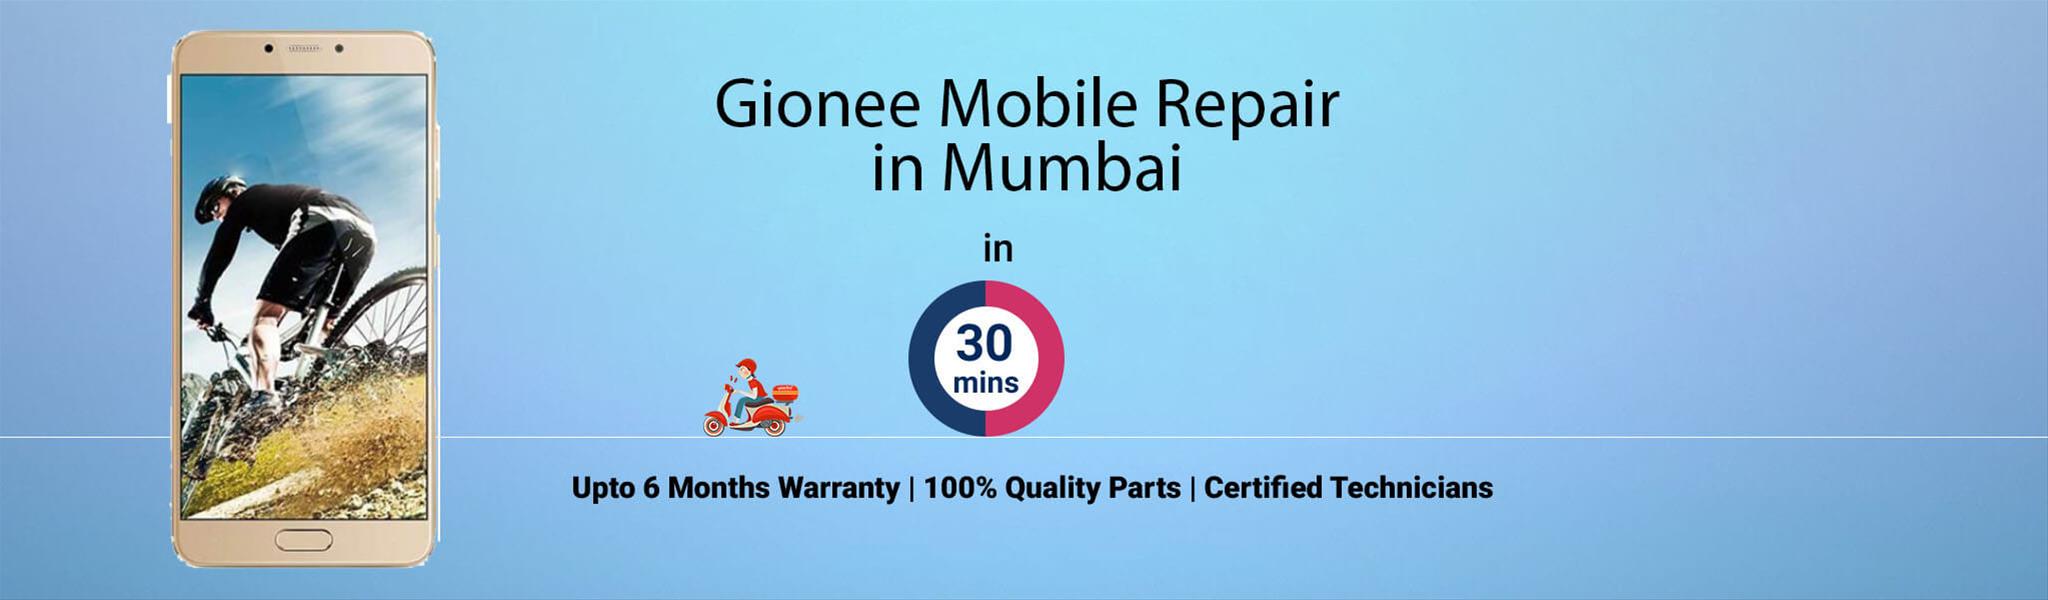 gionee-repair-service-banner-mumbai.jpg